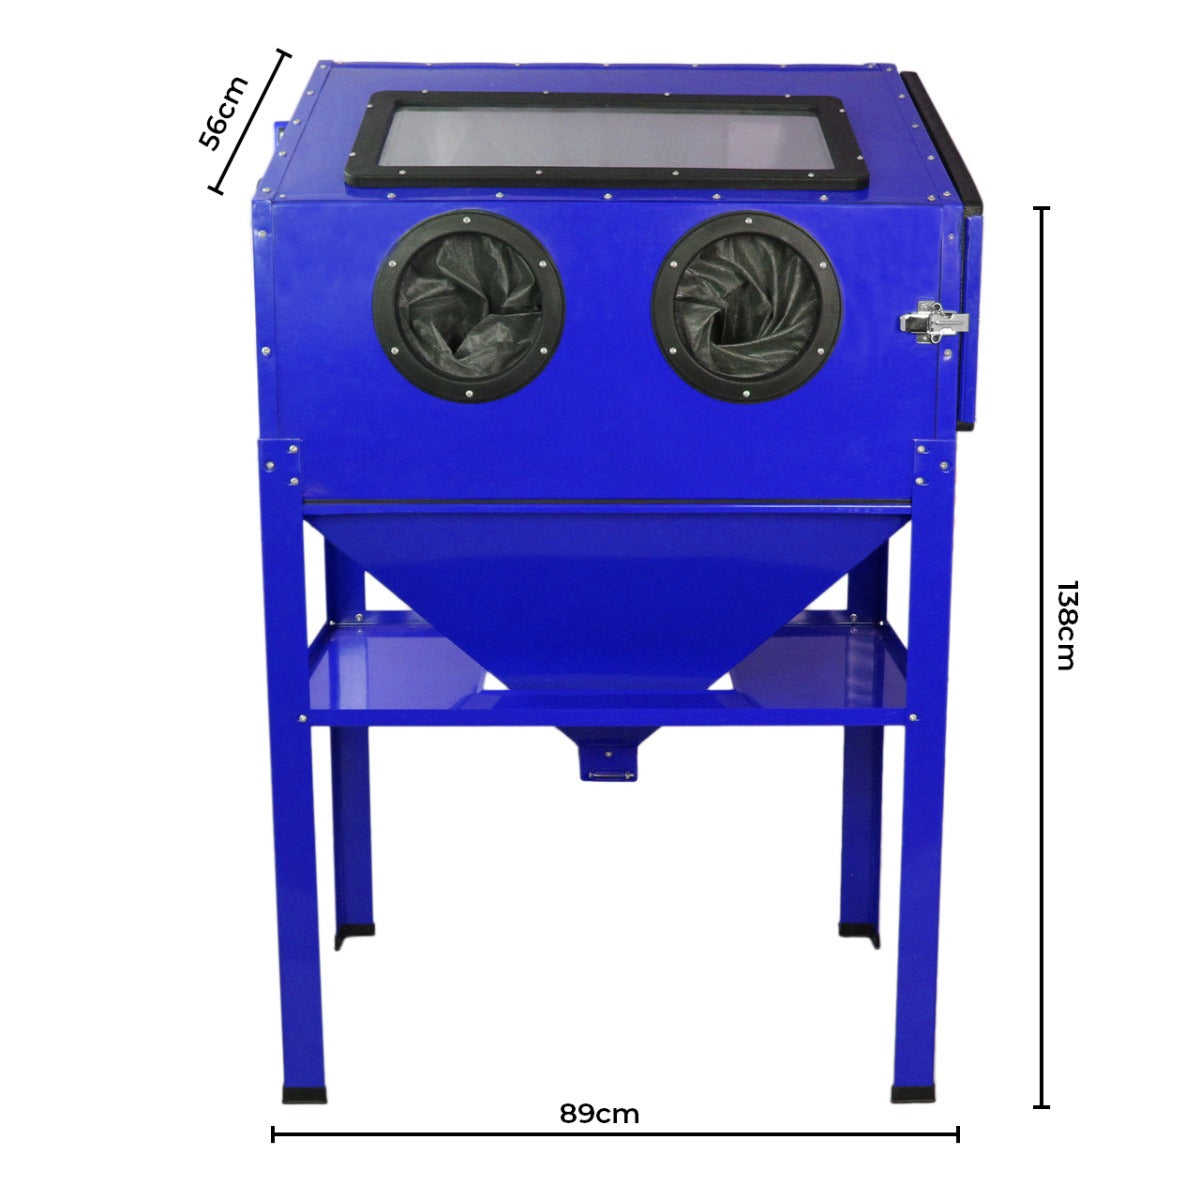 T-Mech Electrostatic Powder Coating Machine & 220L Sandblasting Cabinet